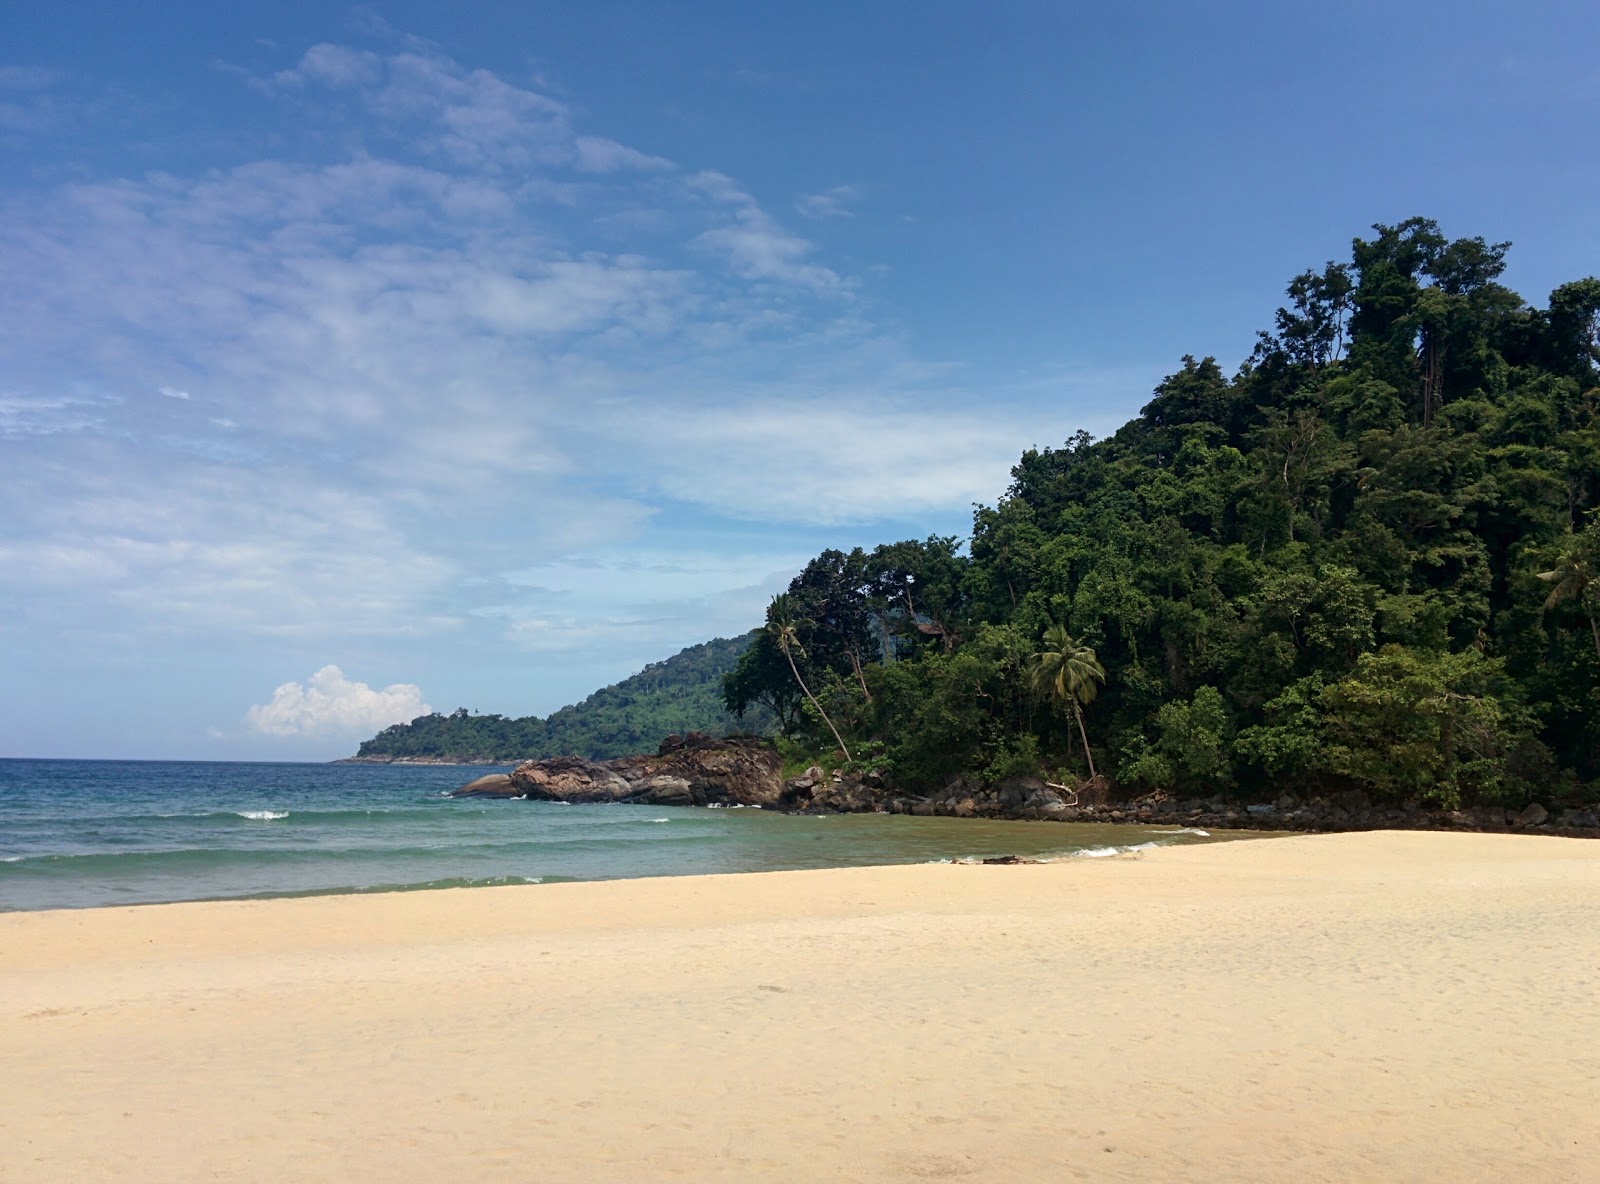 Photo of Juara Beach - popular place among relax connoisseurs